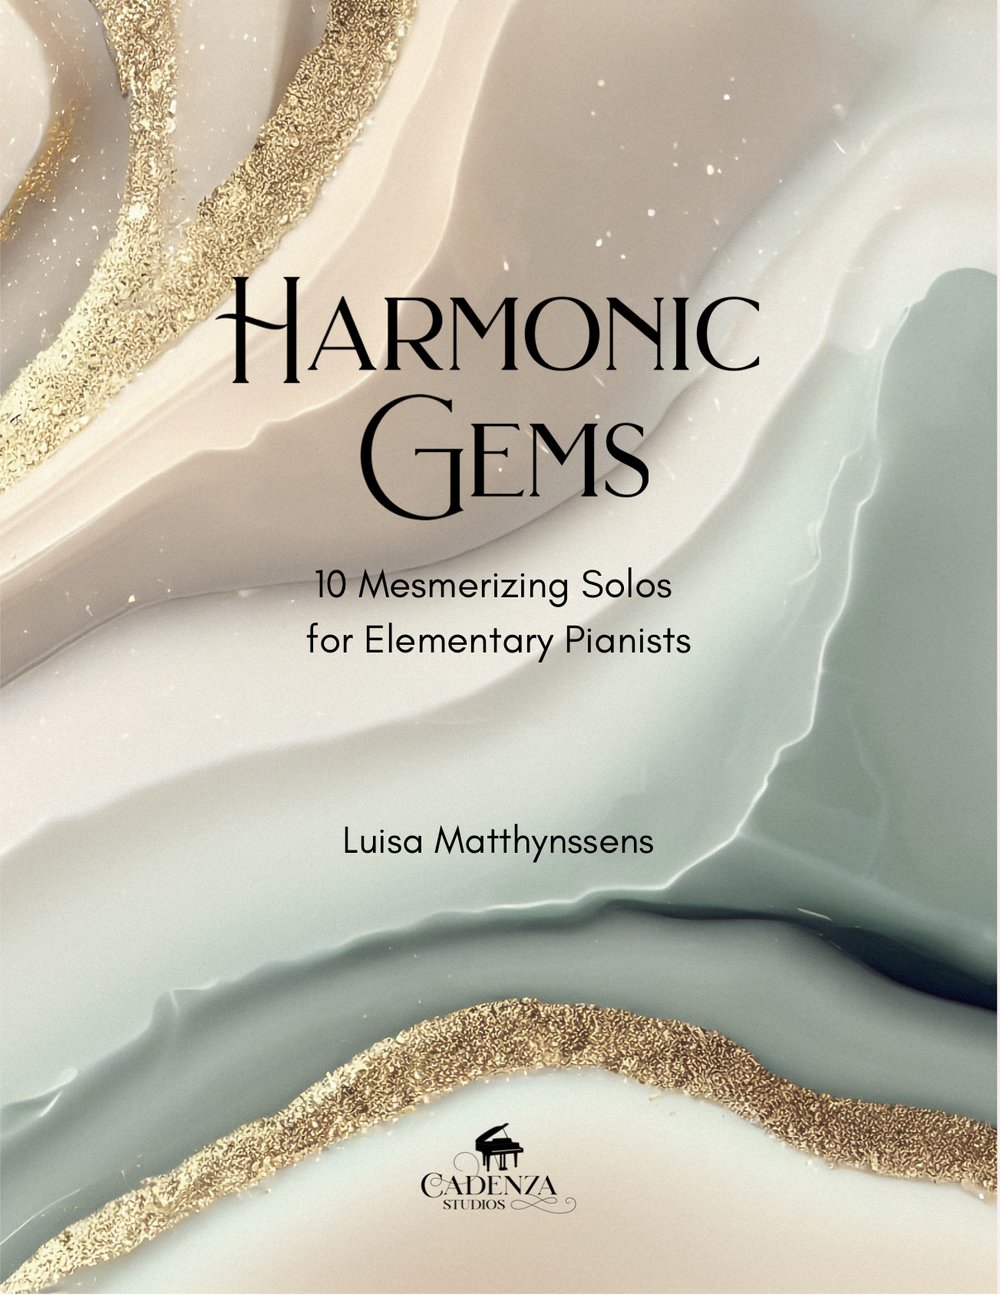 Harmonic Gems digital cover.jpg